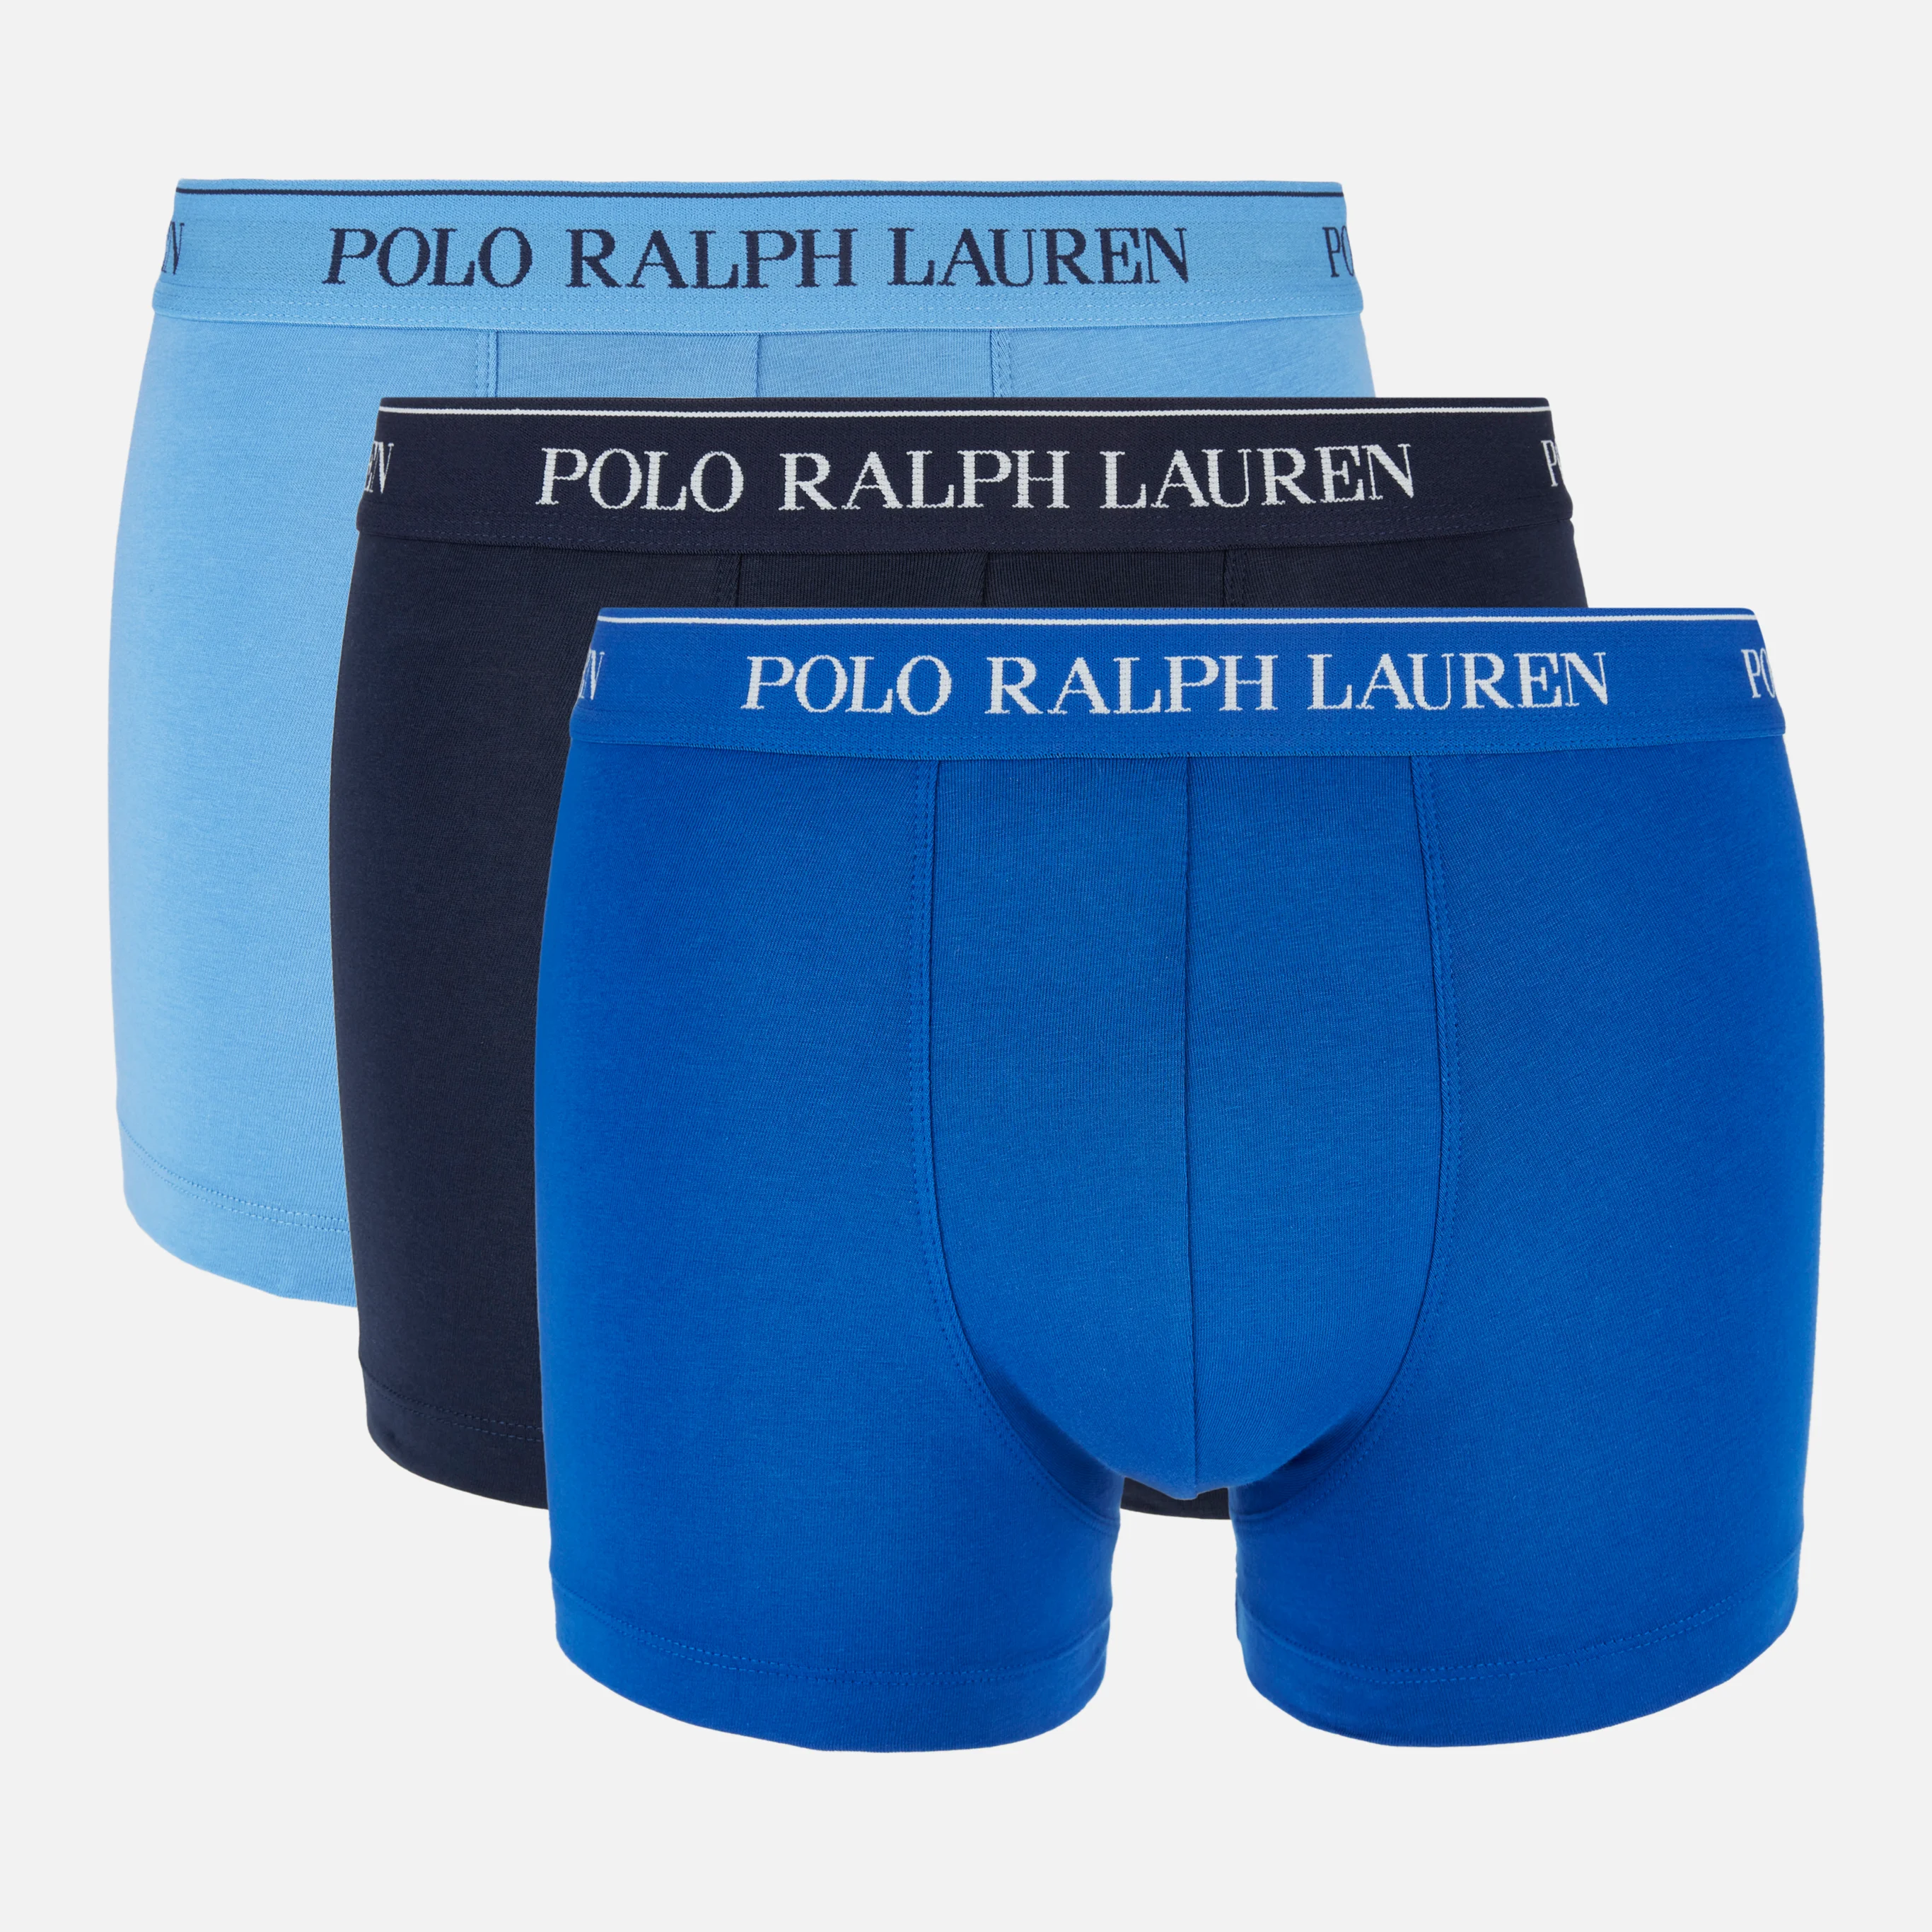 Polo Ralph Lauren Men's Classic 3 Pack Trunks - Cruise Navy/Saphire Star/Bermuda Blue Image 1